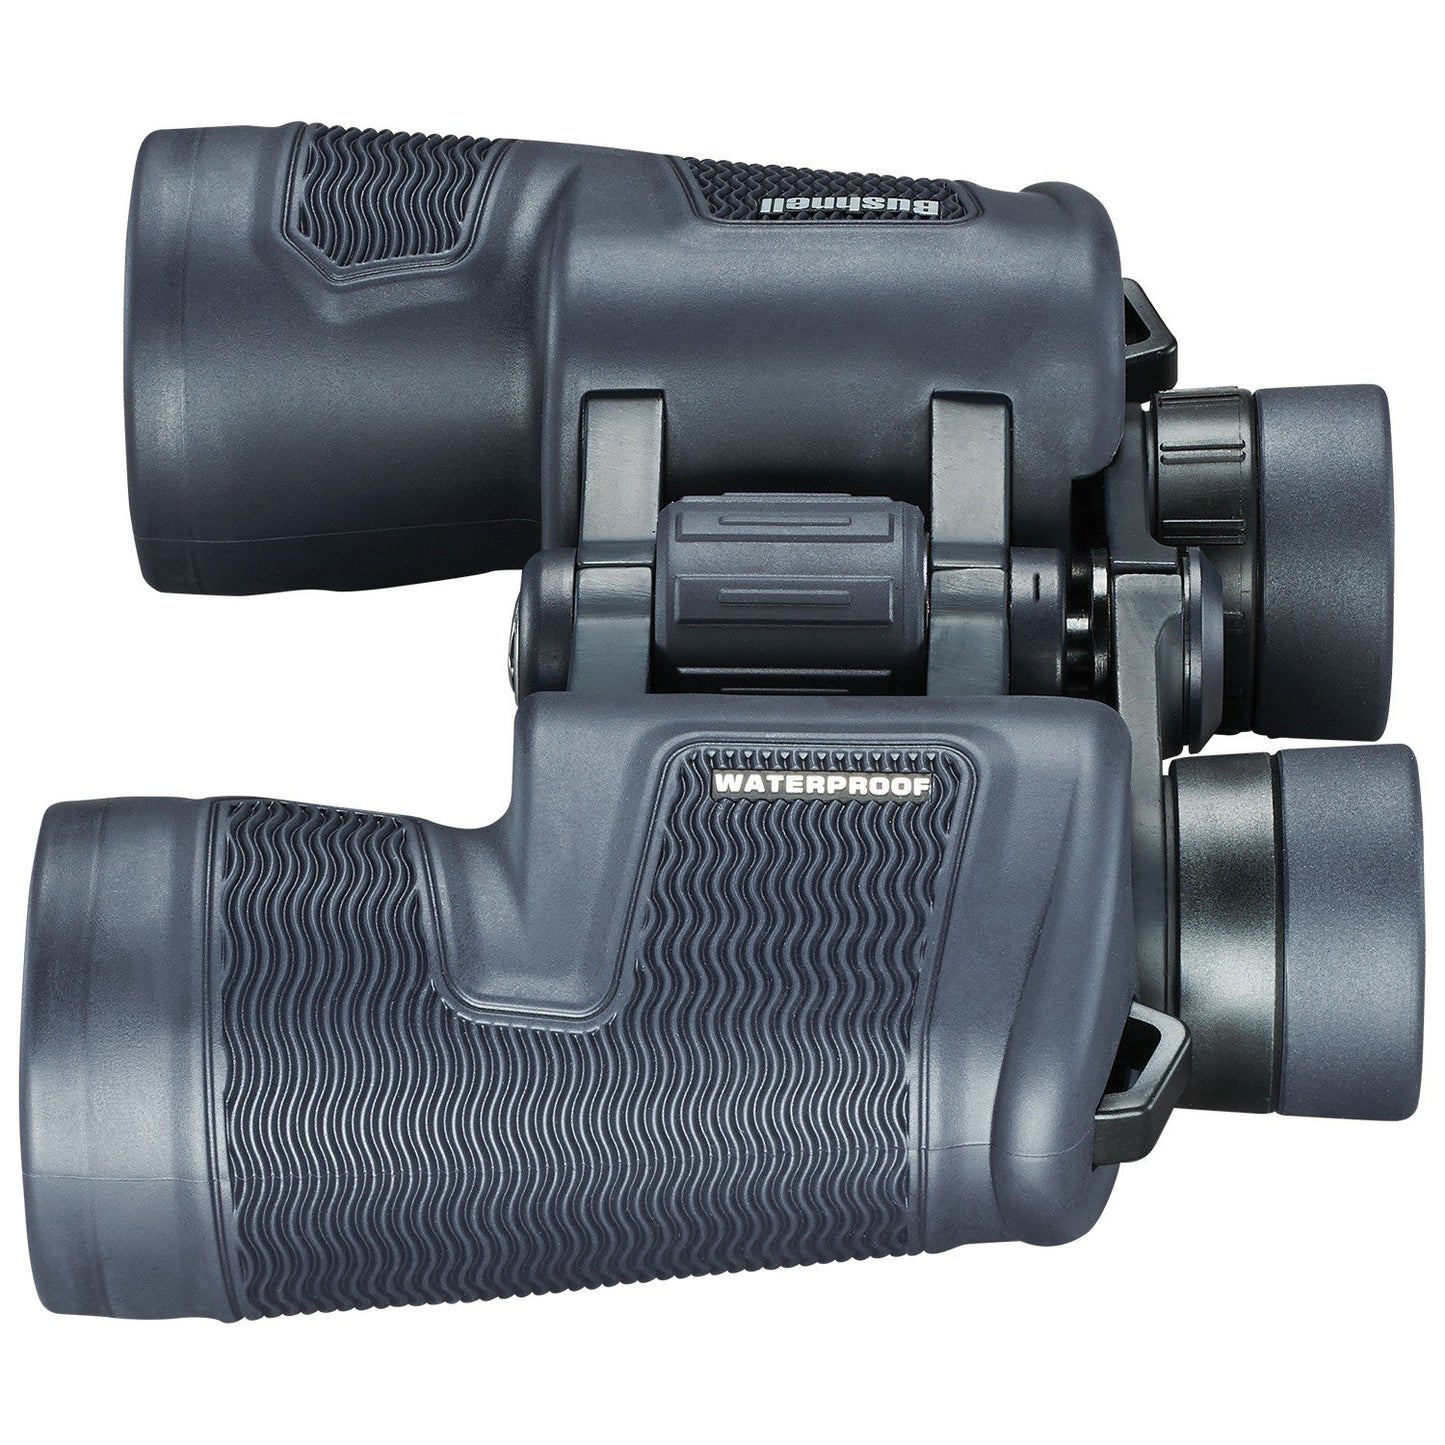 Bushnell 134212 H2O12x 42 mm Binoculars